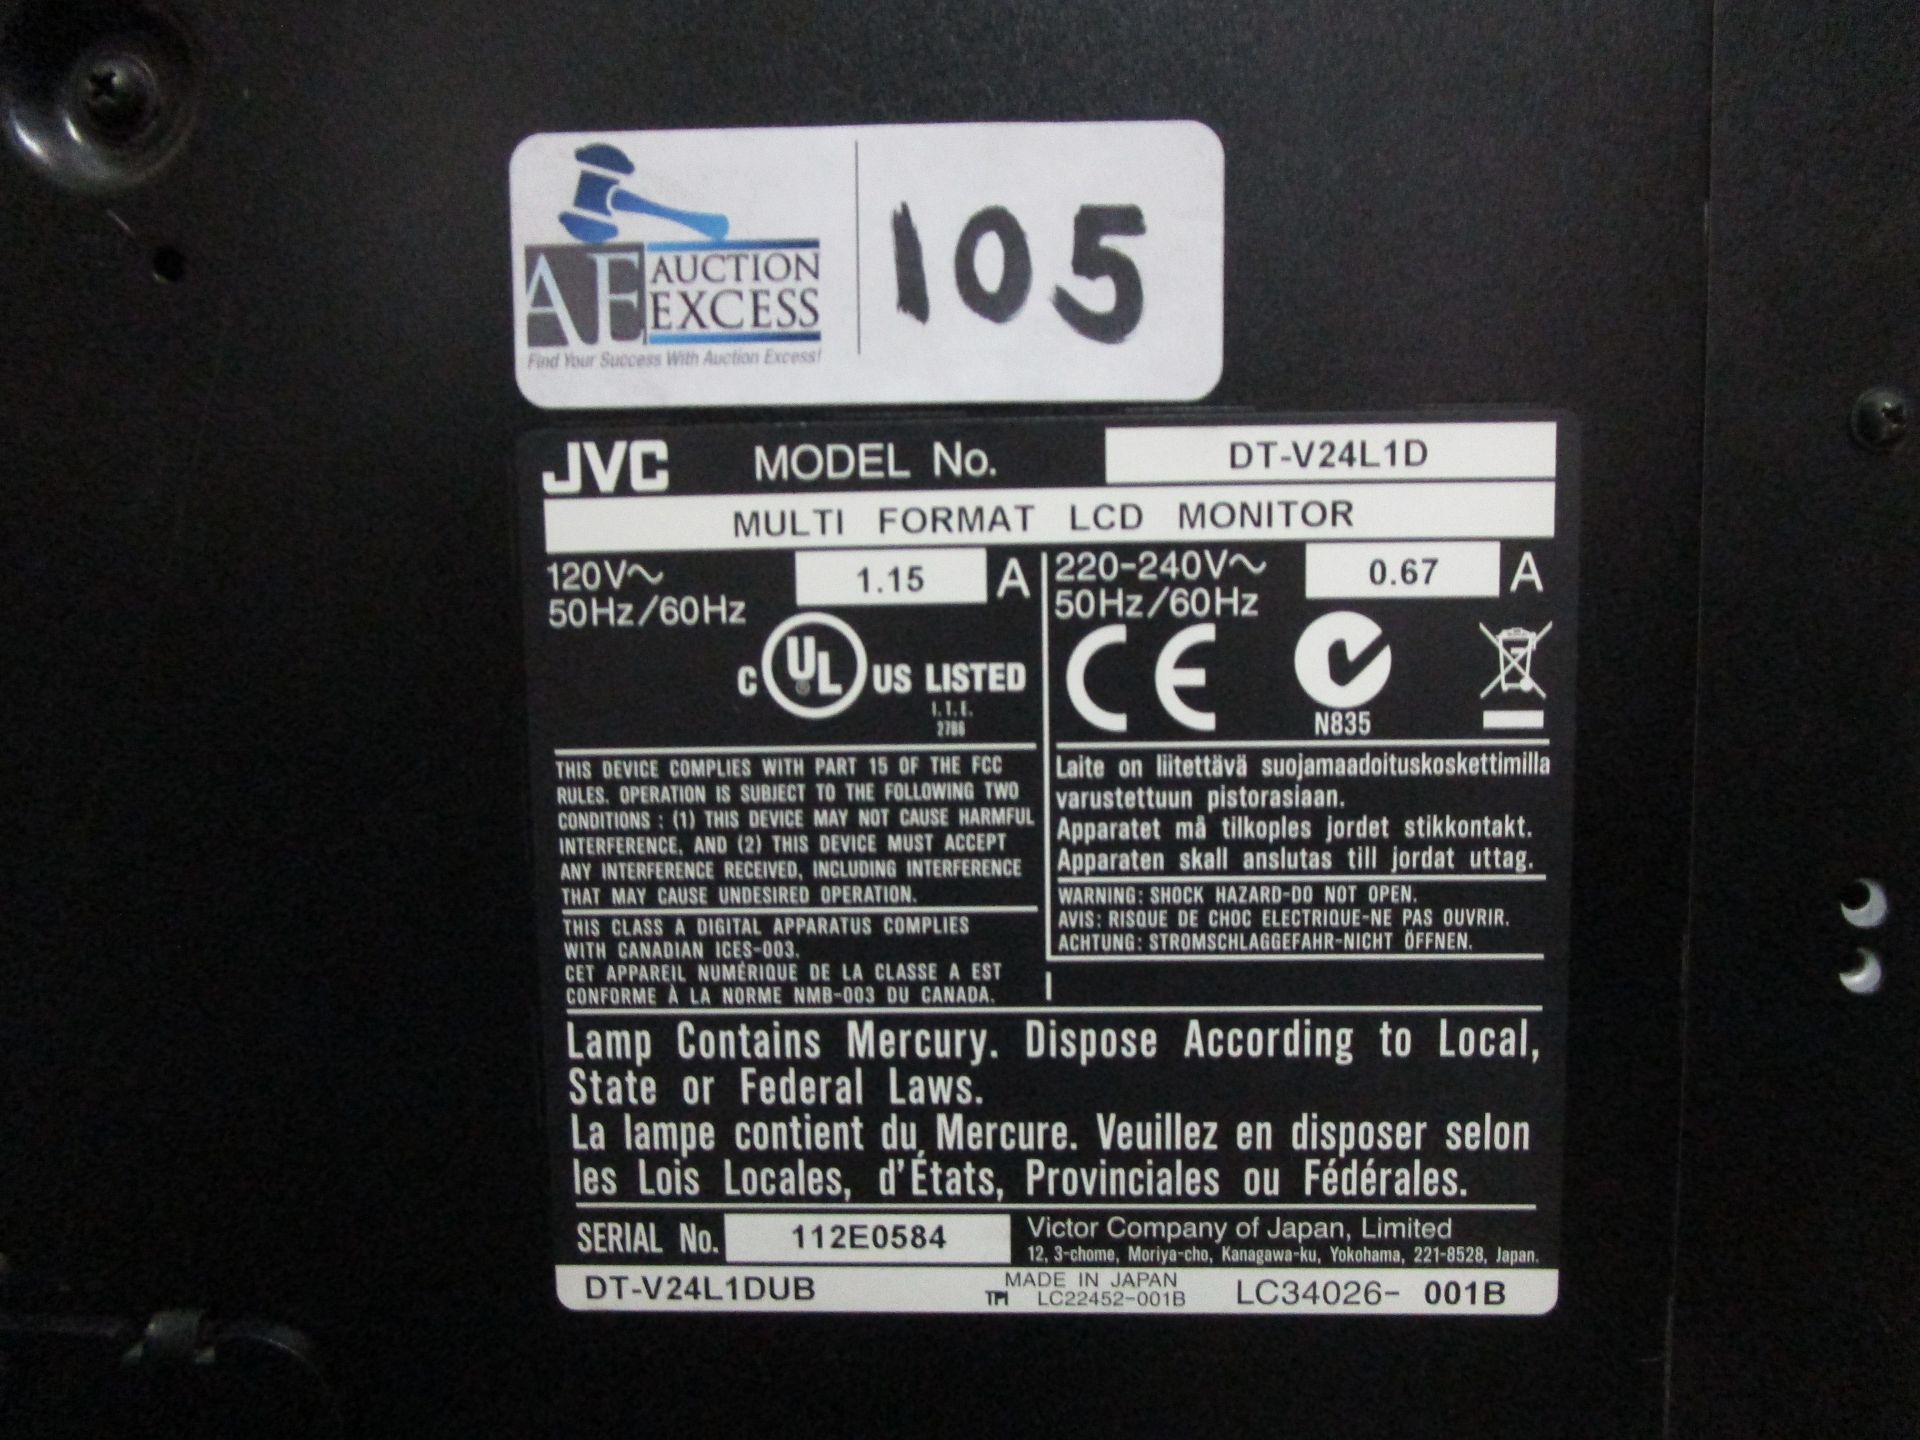 JVC MULTI FORMAT LCD MONITOR DT-V24L1D - Image 2 of 4